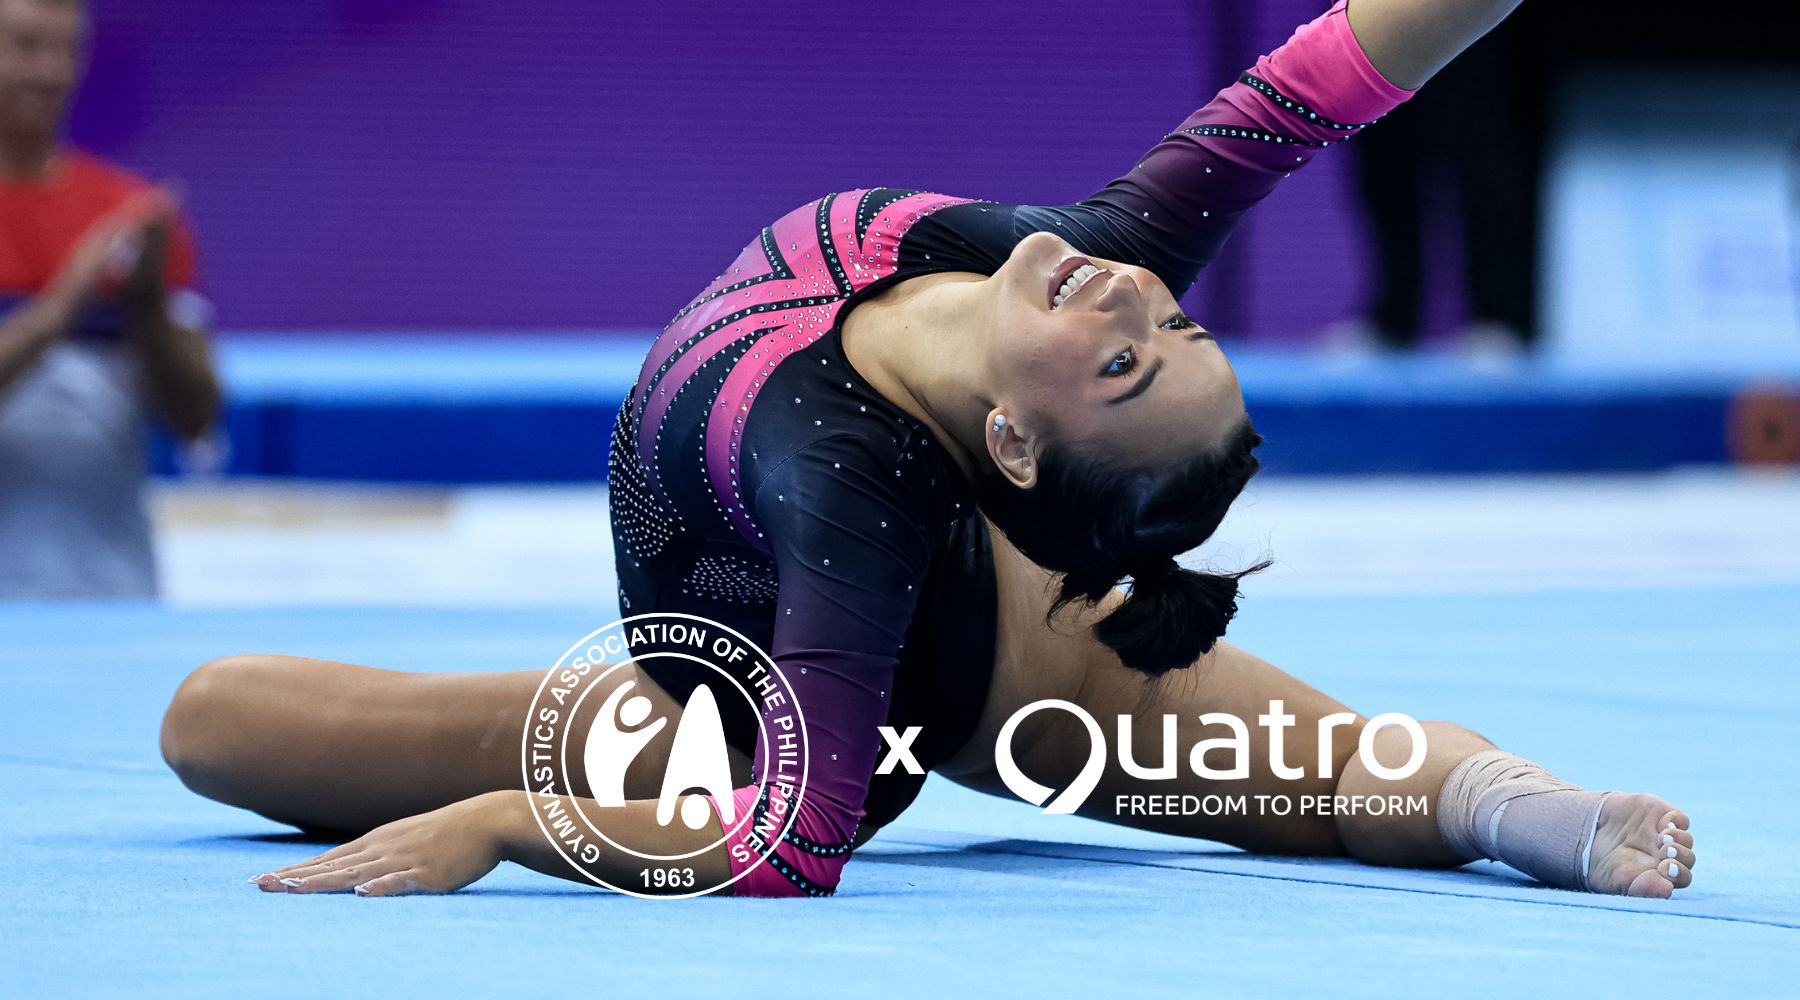 Quatro Gymnastics, Launches Partnership with the Gymnastics Association of the Philippines